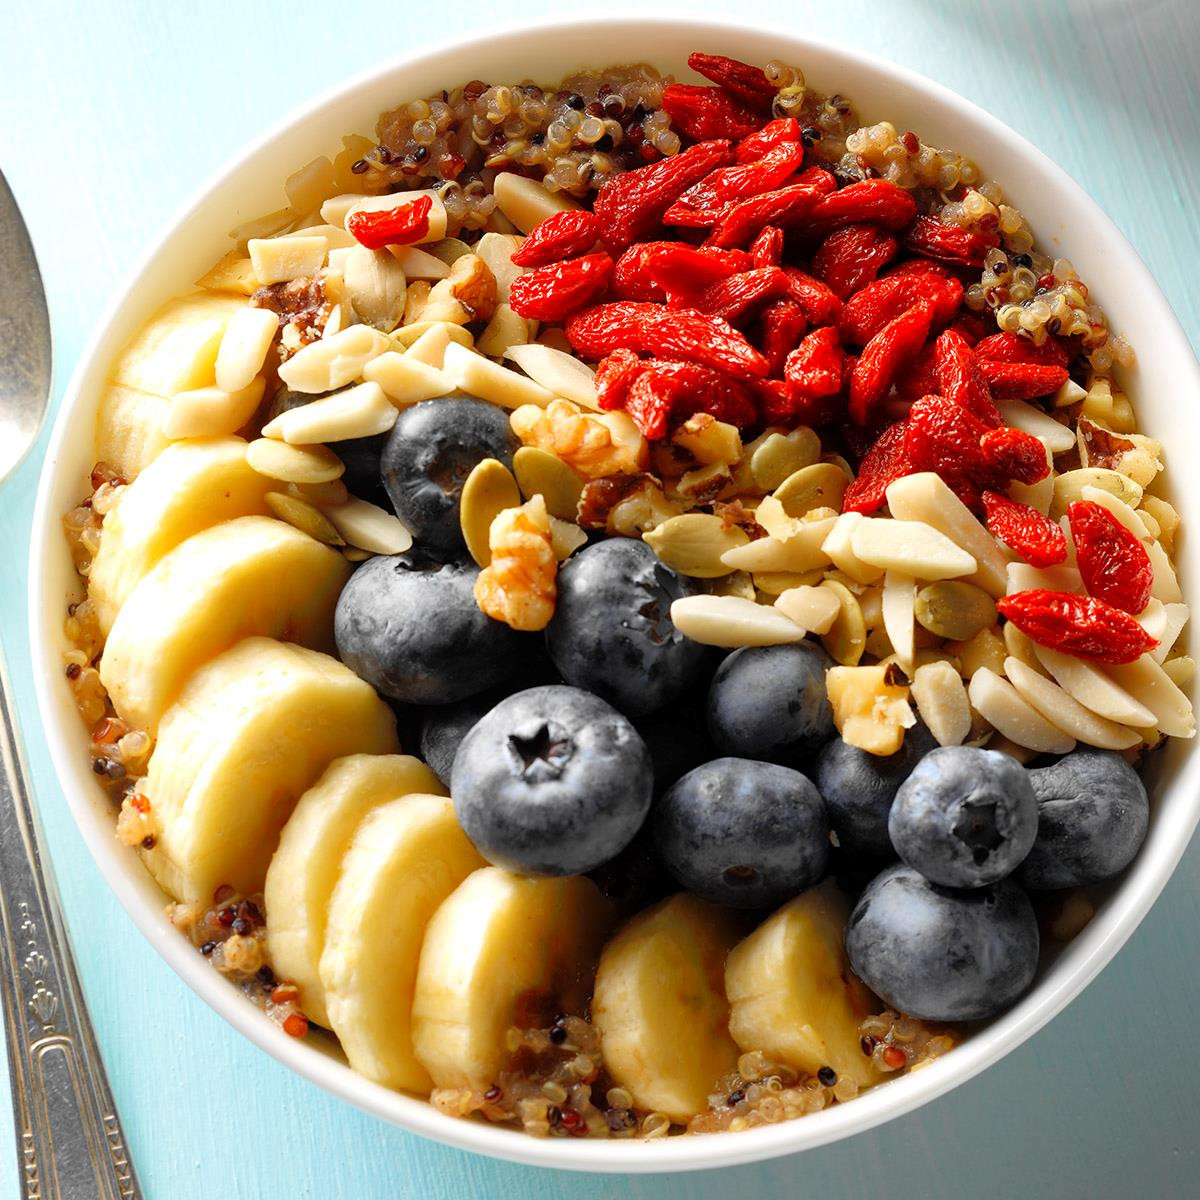 Healthy Foods For Breakfast
 45 Heart Healthy Breakfasts